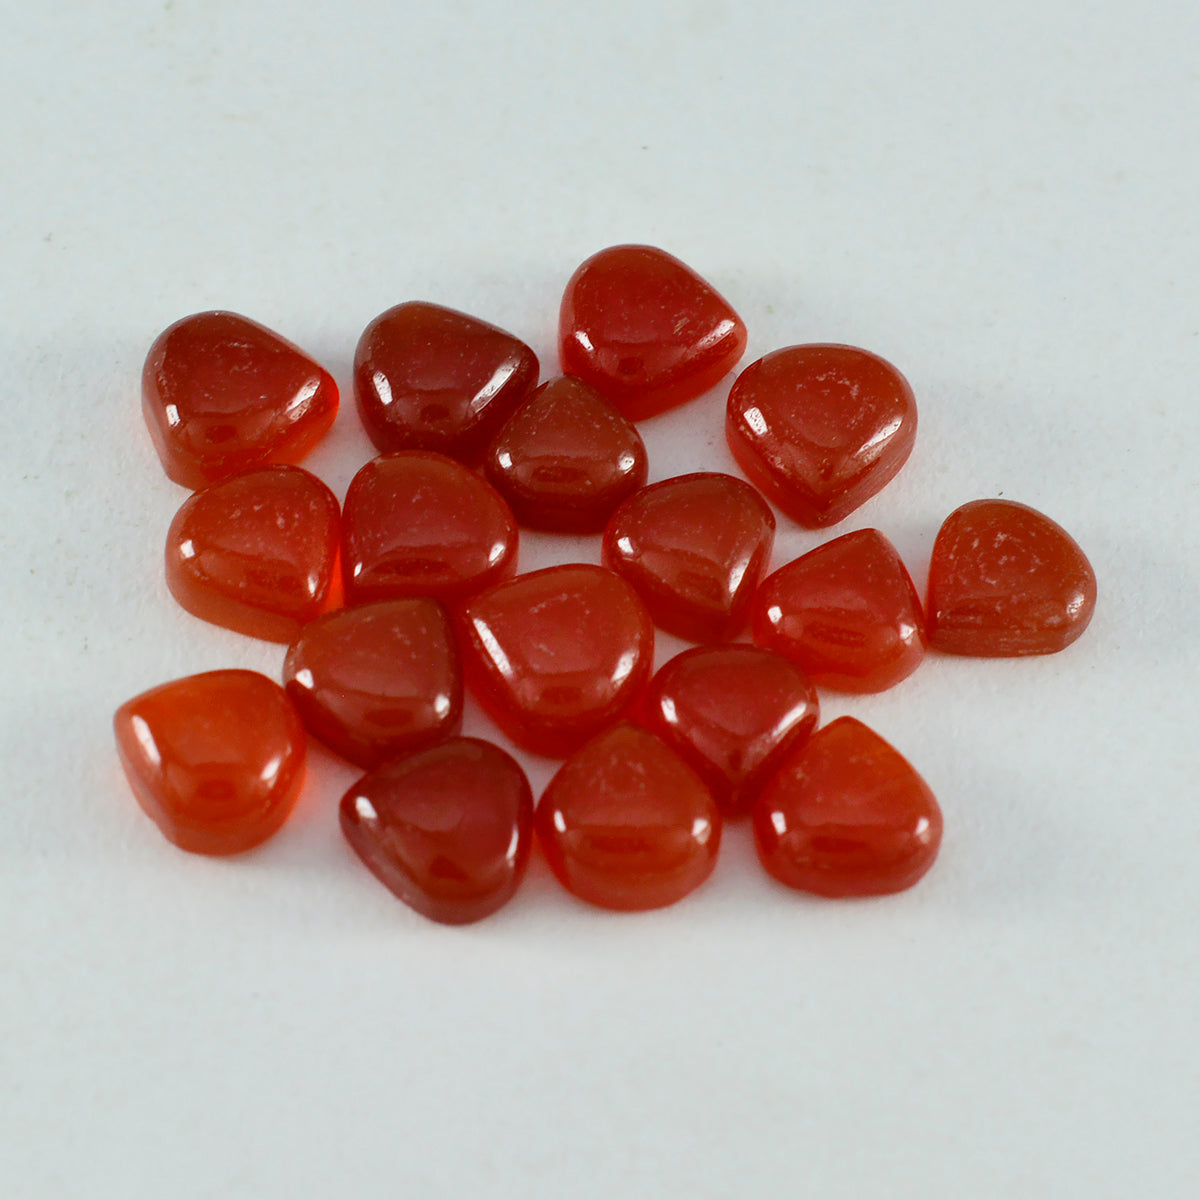 Riyogems 1PC Rode Onyx Cabochon 6x6 mm Hartvorm aantrekkelijke Kwaliteit Gem